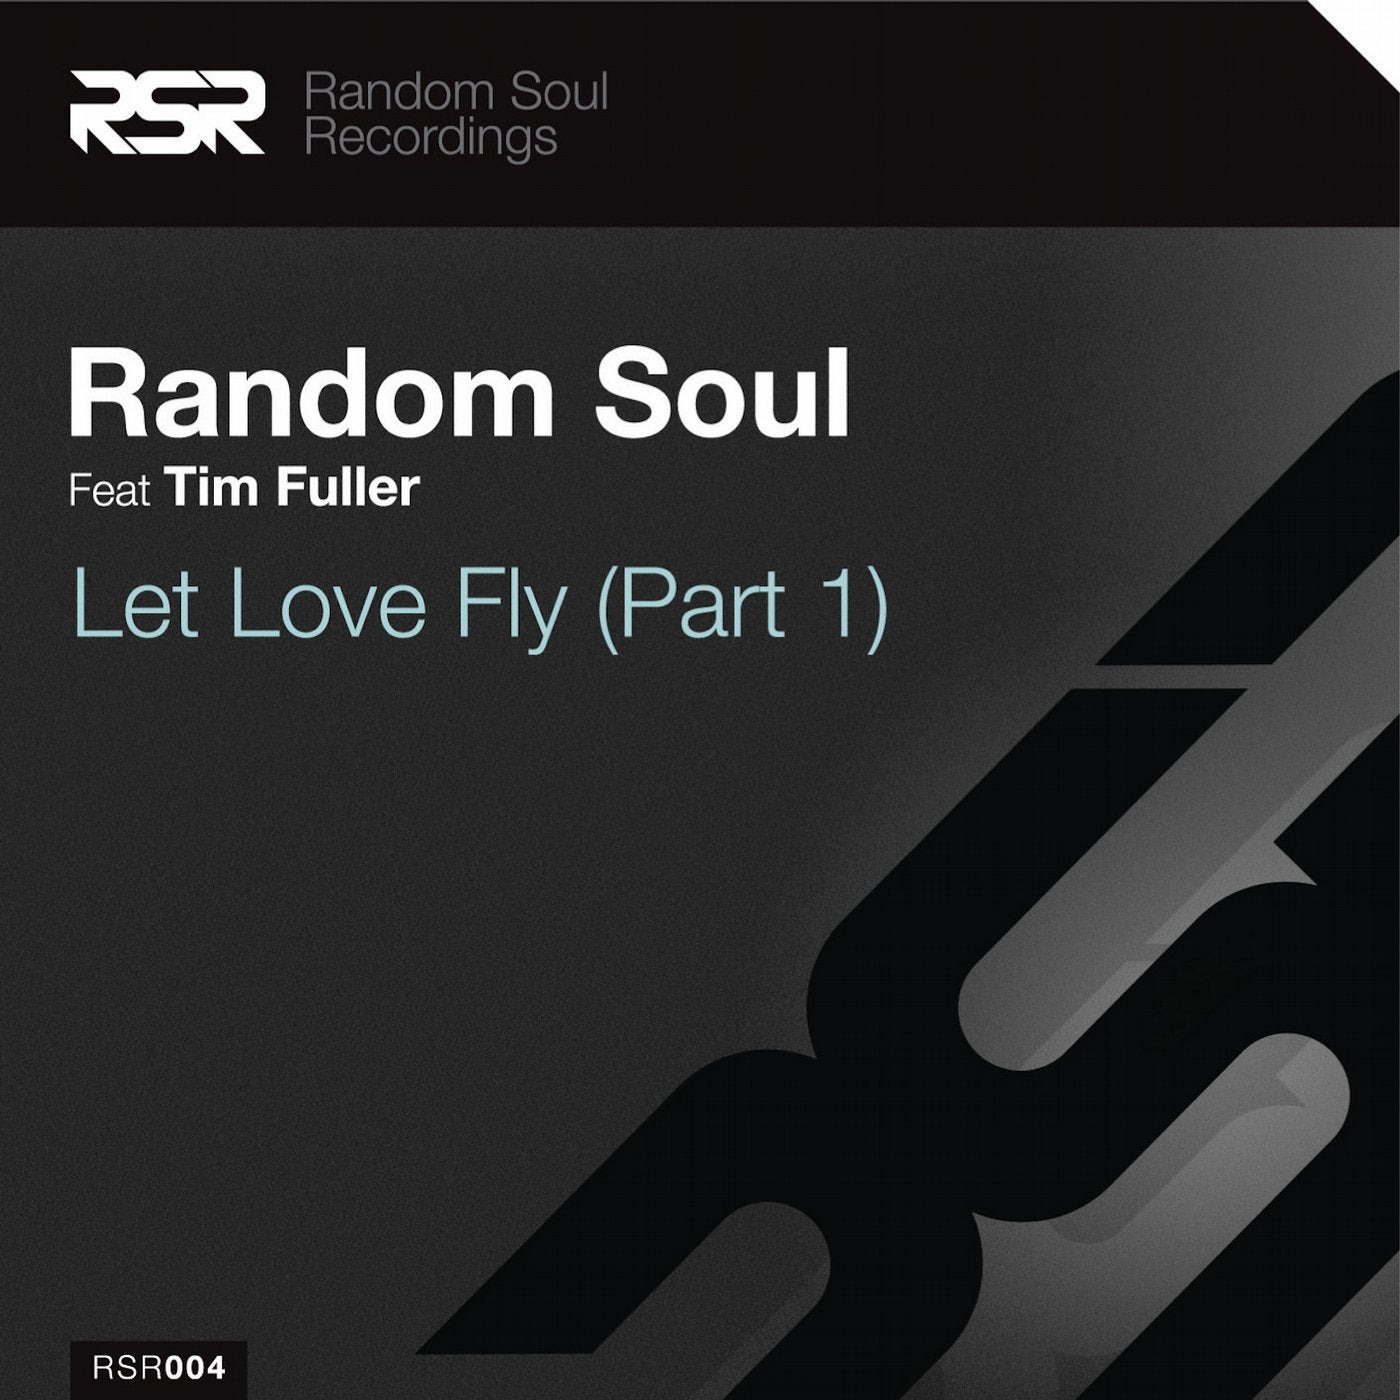 Let Love Fly (Pt. 1) feat. Tim Fuller